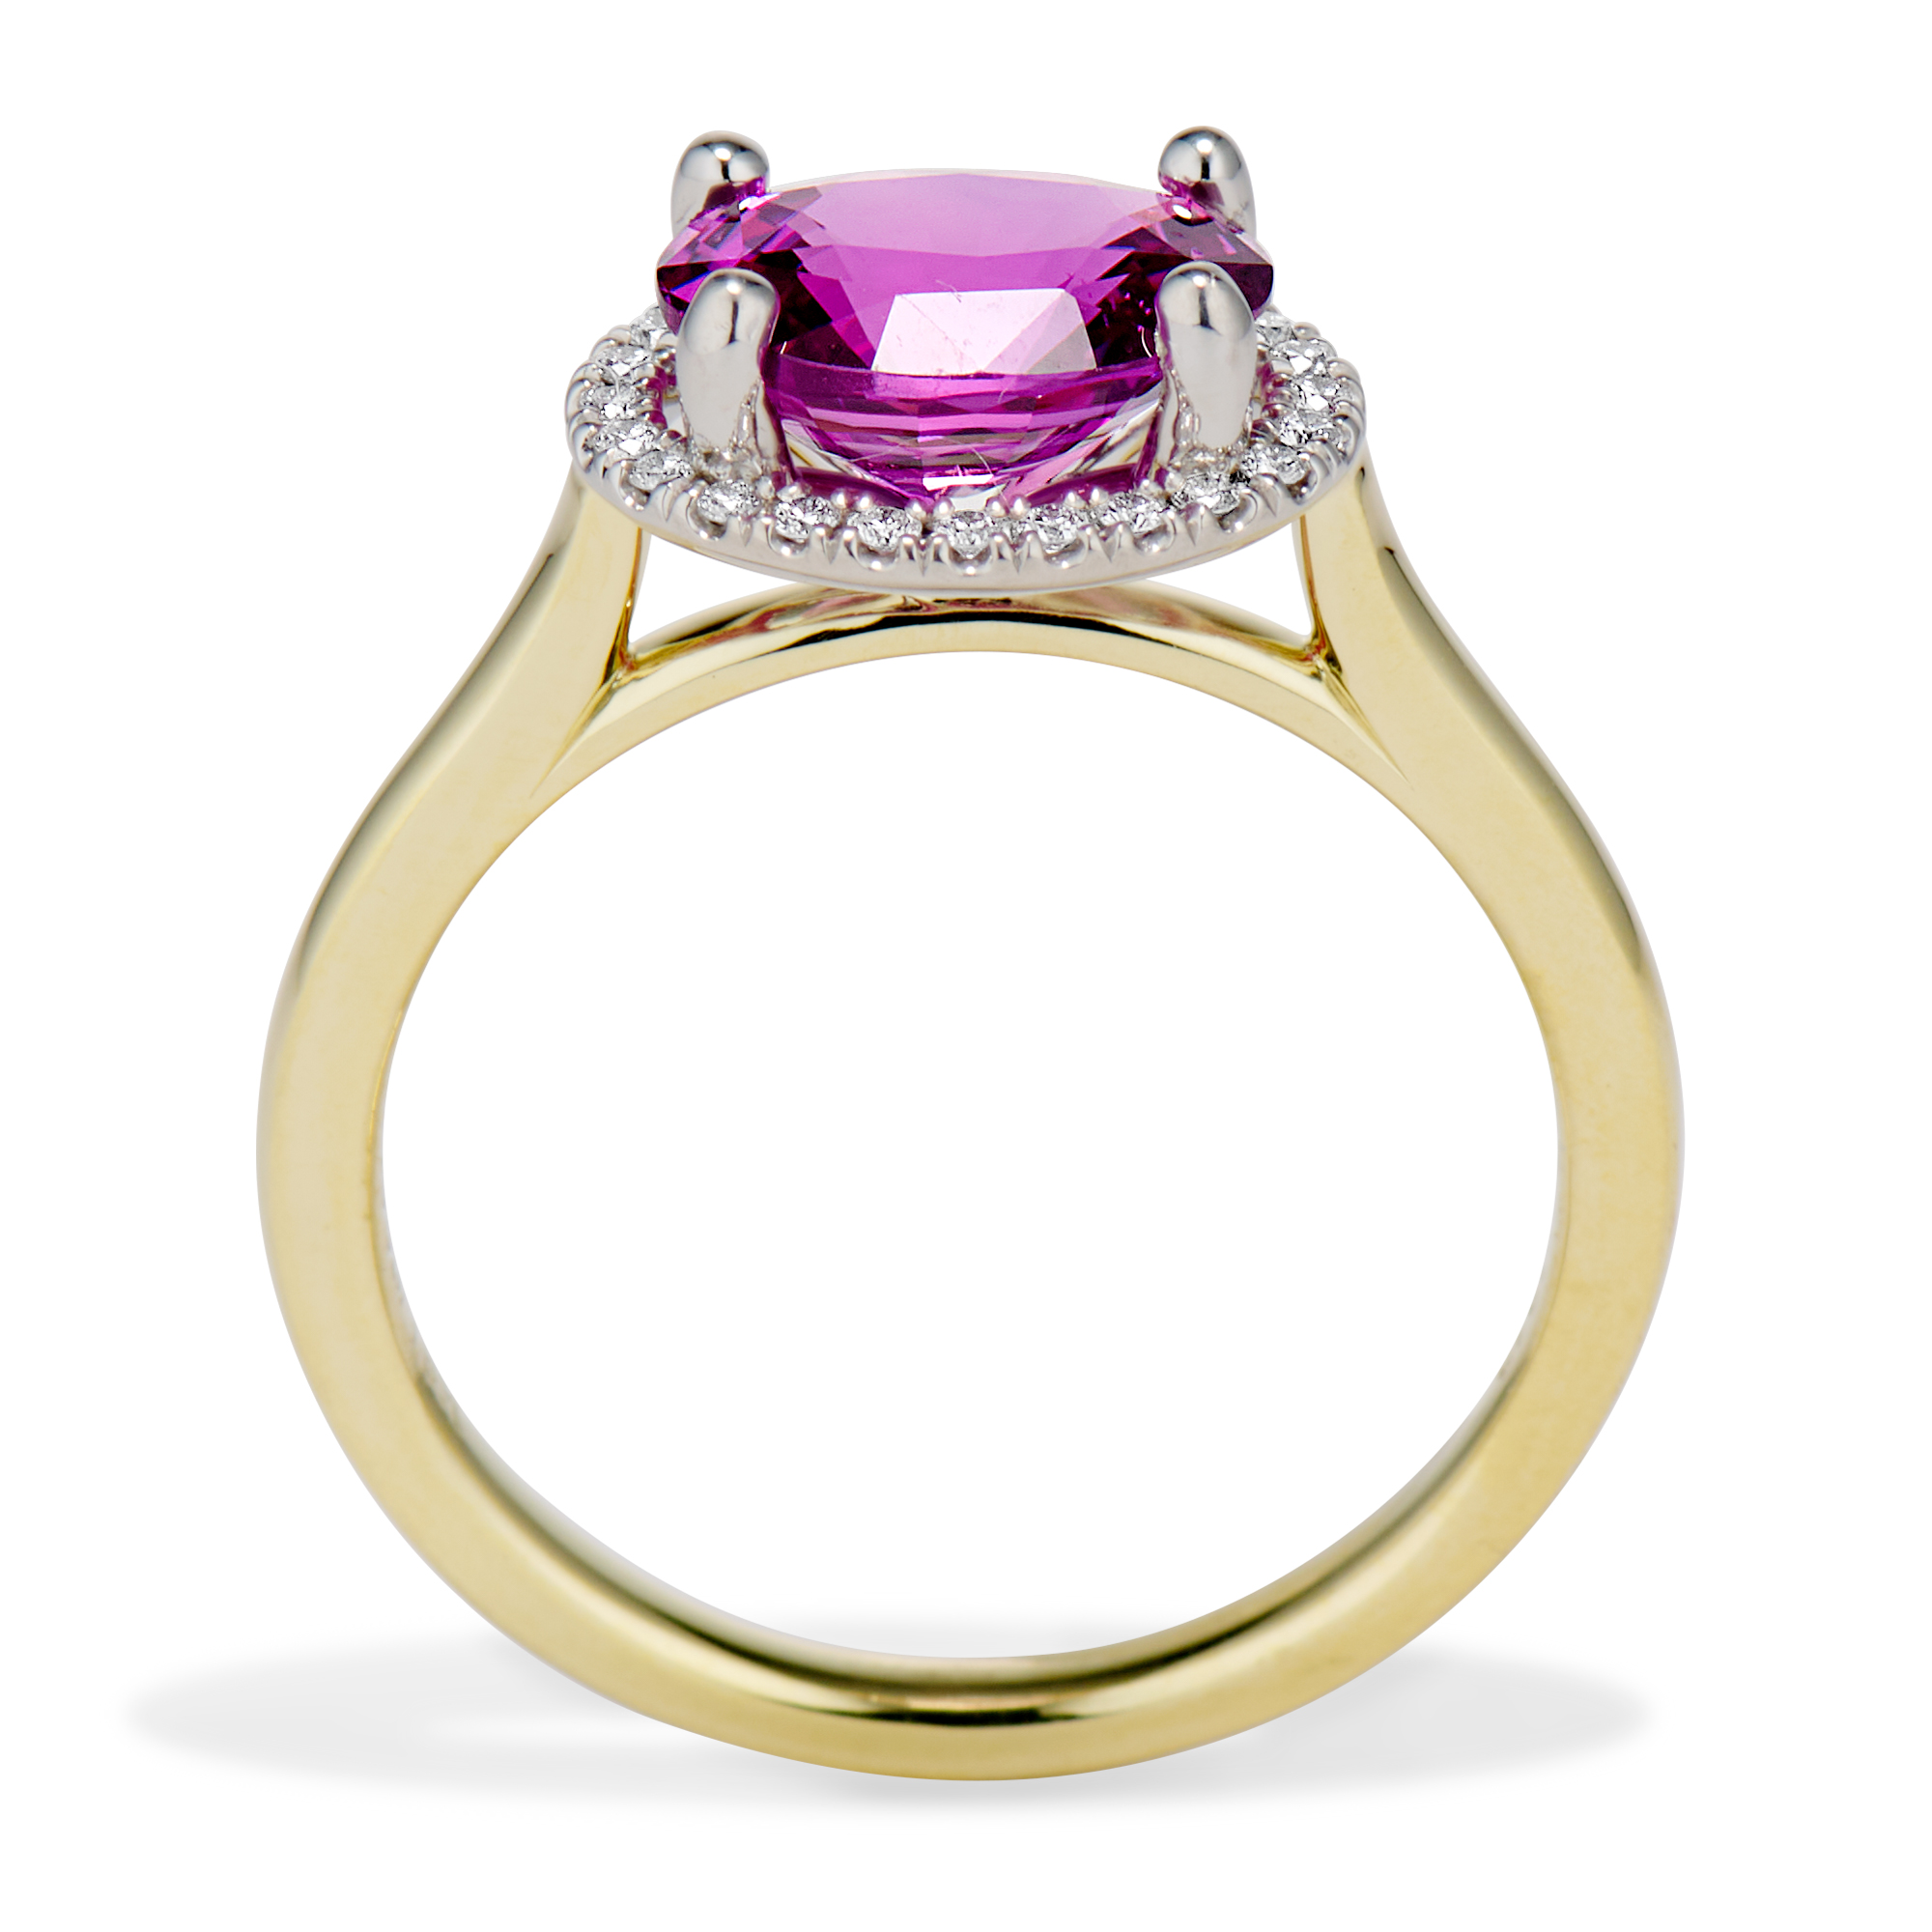 Ilikaka Hot Pink Emeral Cut Sapphire 1.5 ct SOLITAIRE Ring rose gold  Vermeil sz8 | eBay